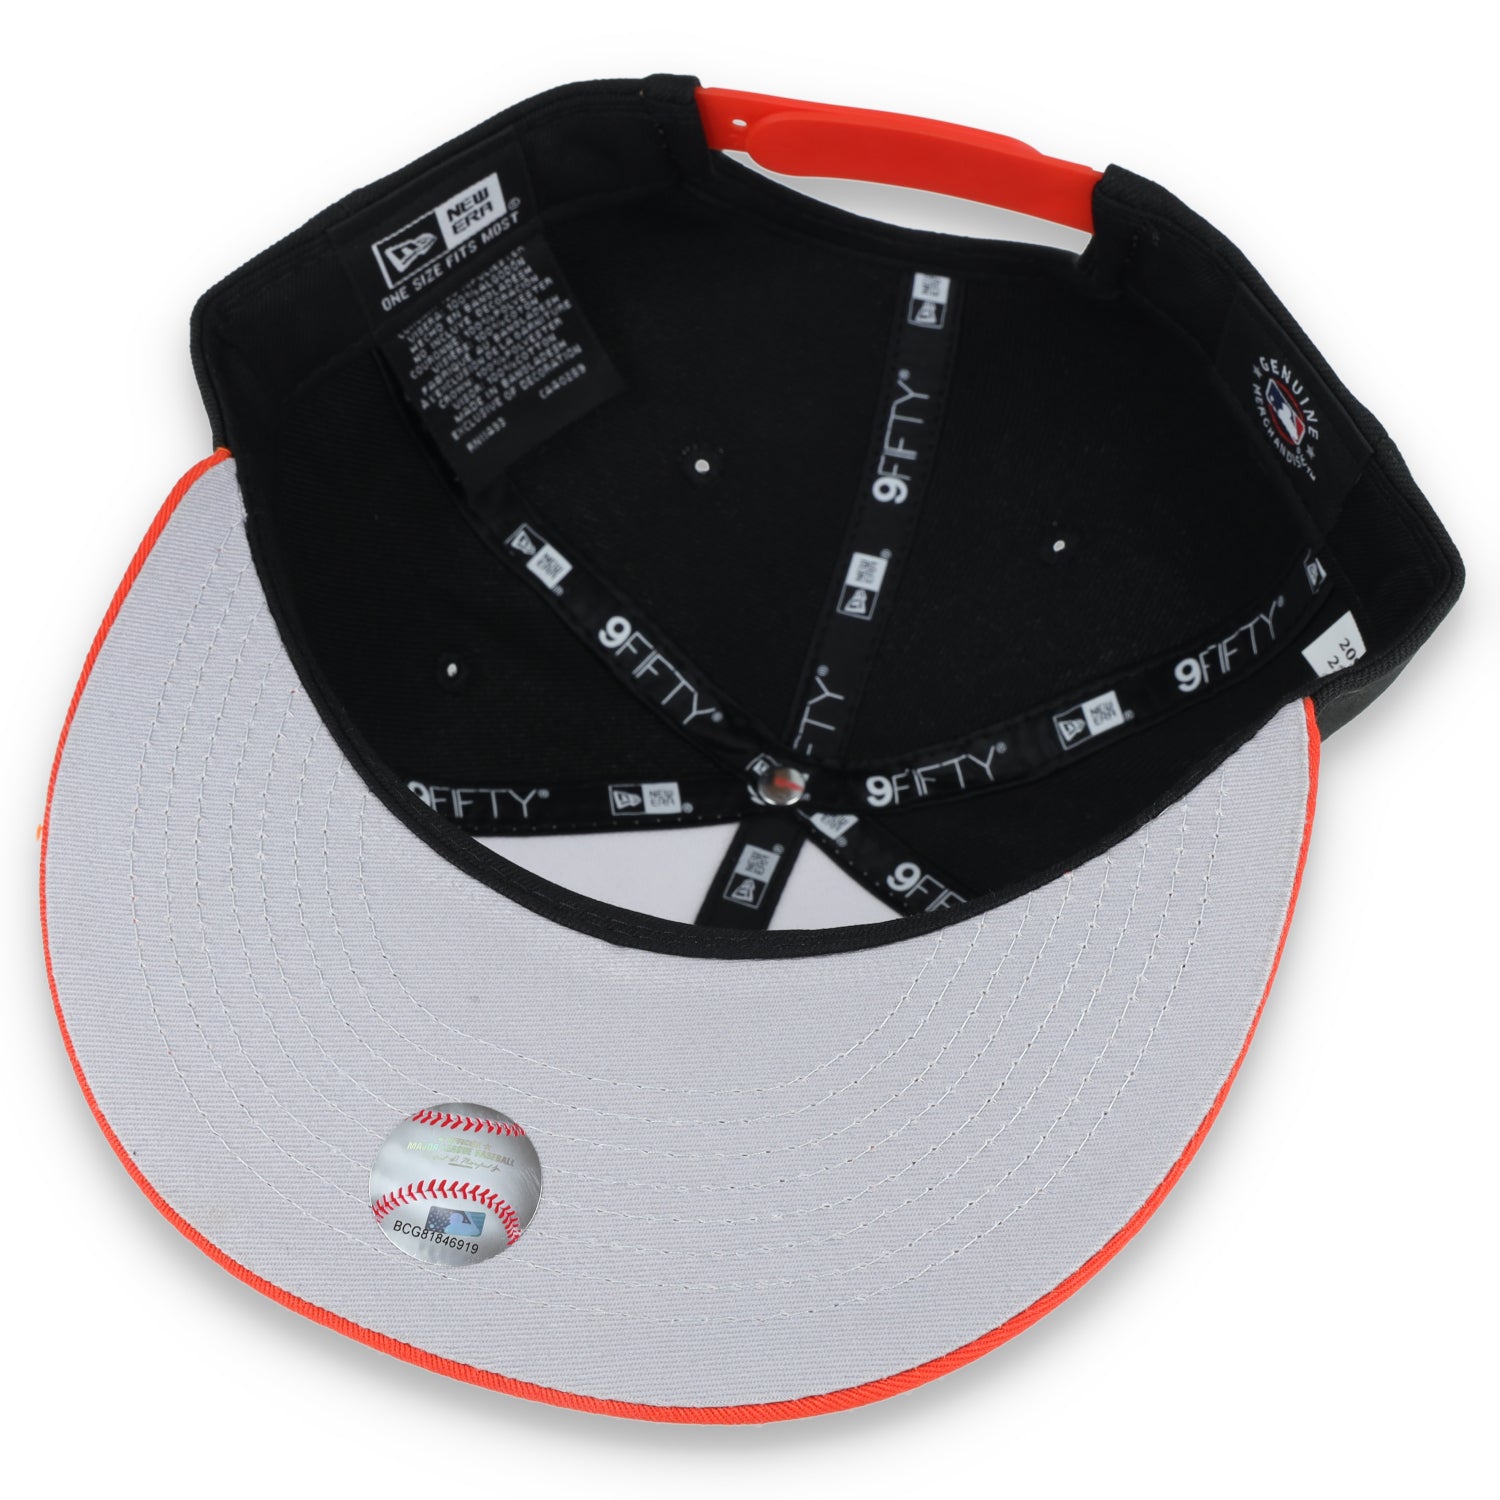 New Era San Francisco Giants Retro Sport 9FIFTY Snapback Hat - White/Black